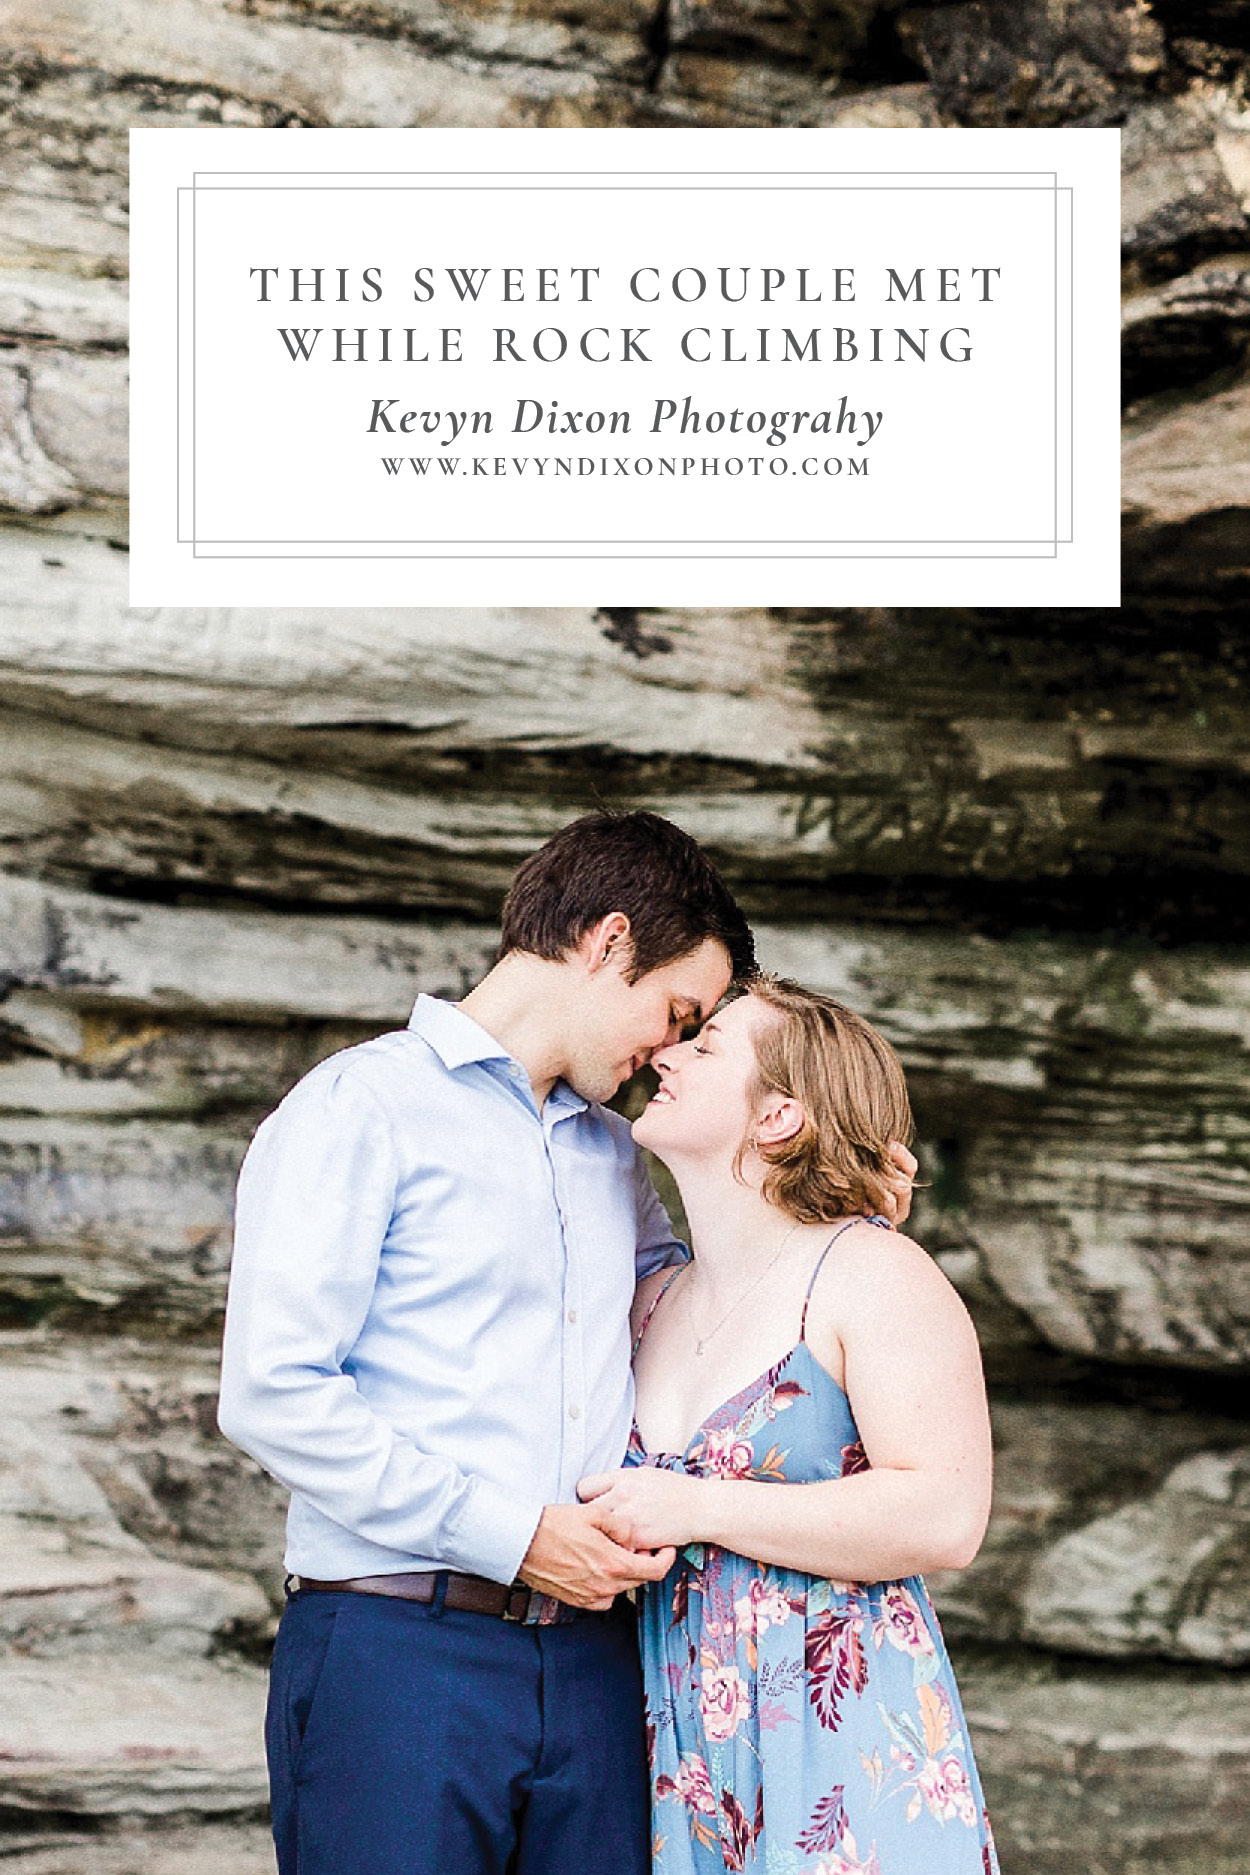 This Sweet Couple Met While Rock Climbing Pin Image